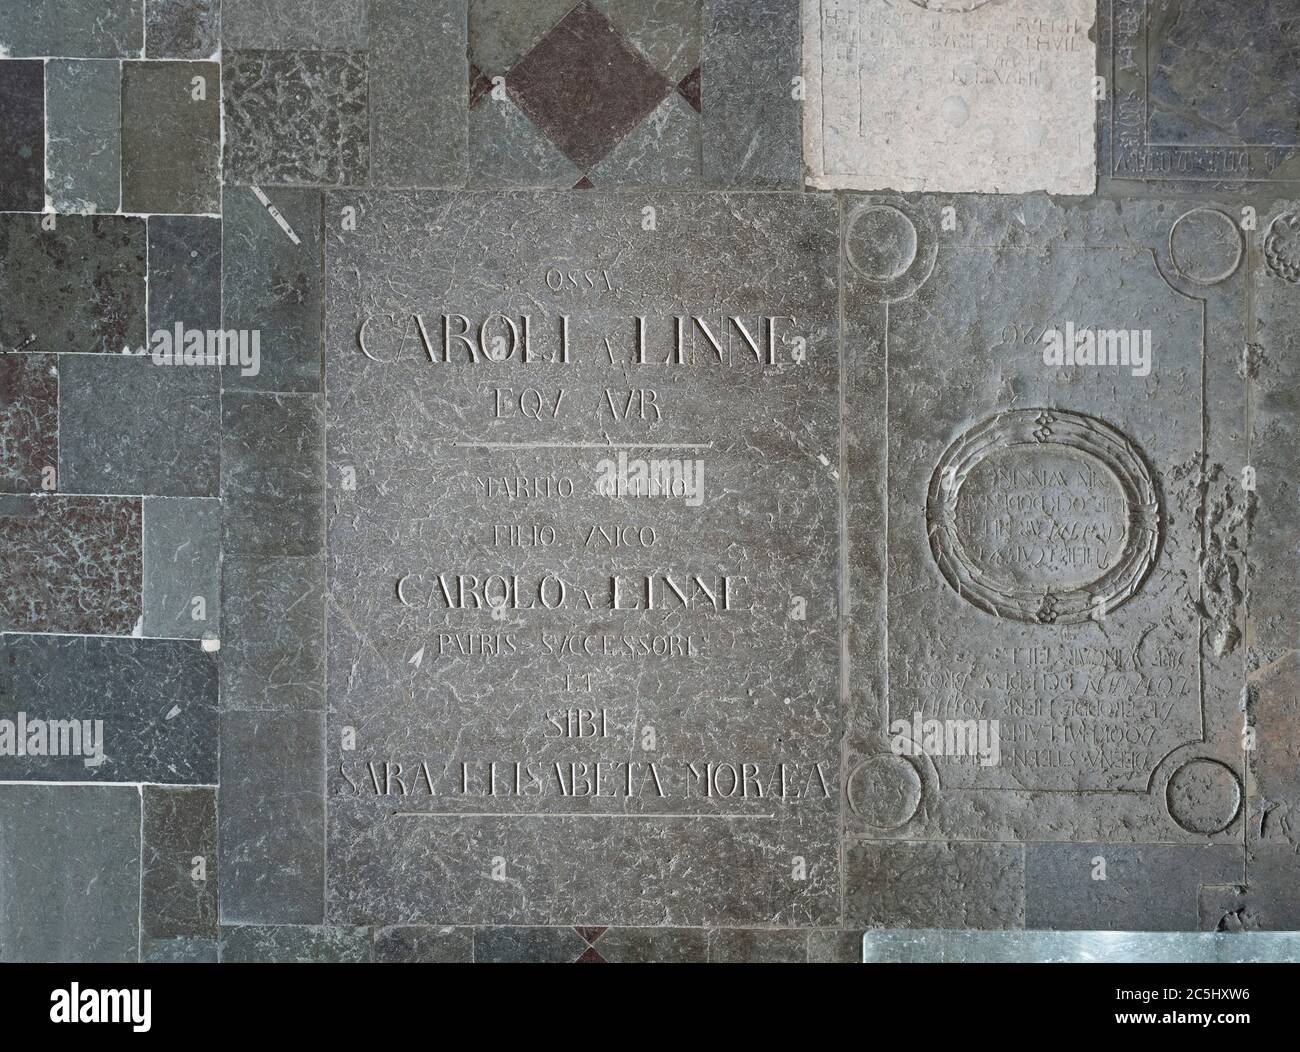 The grave of Carl Linnaeus inside Uppsala Cathedral (Domkyrka). Uppsala, Sweden, Scandinavia. Stock Photo